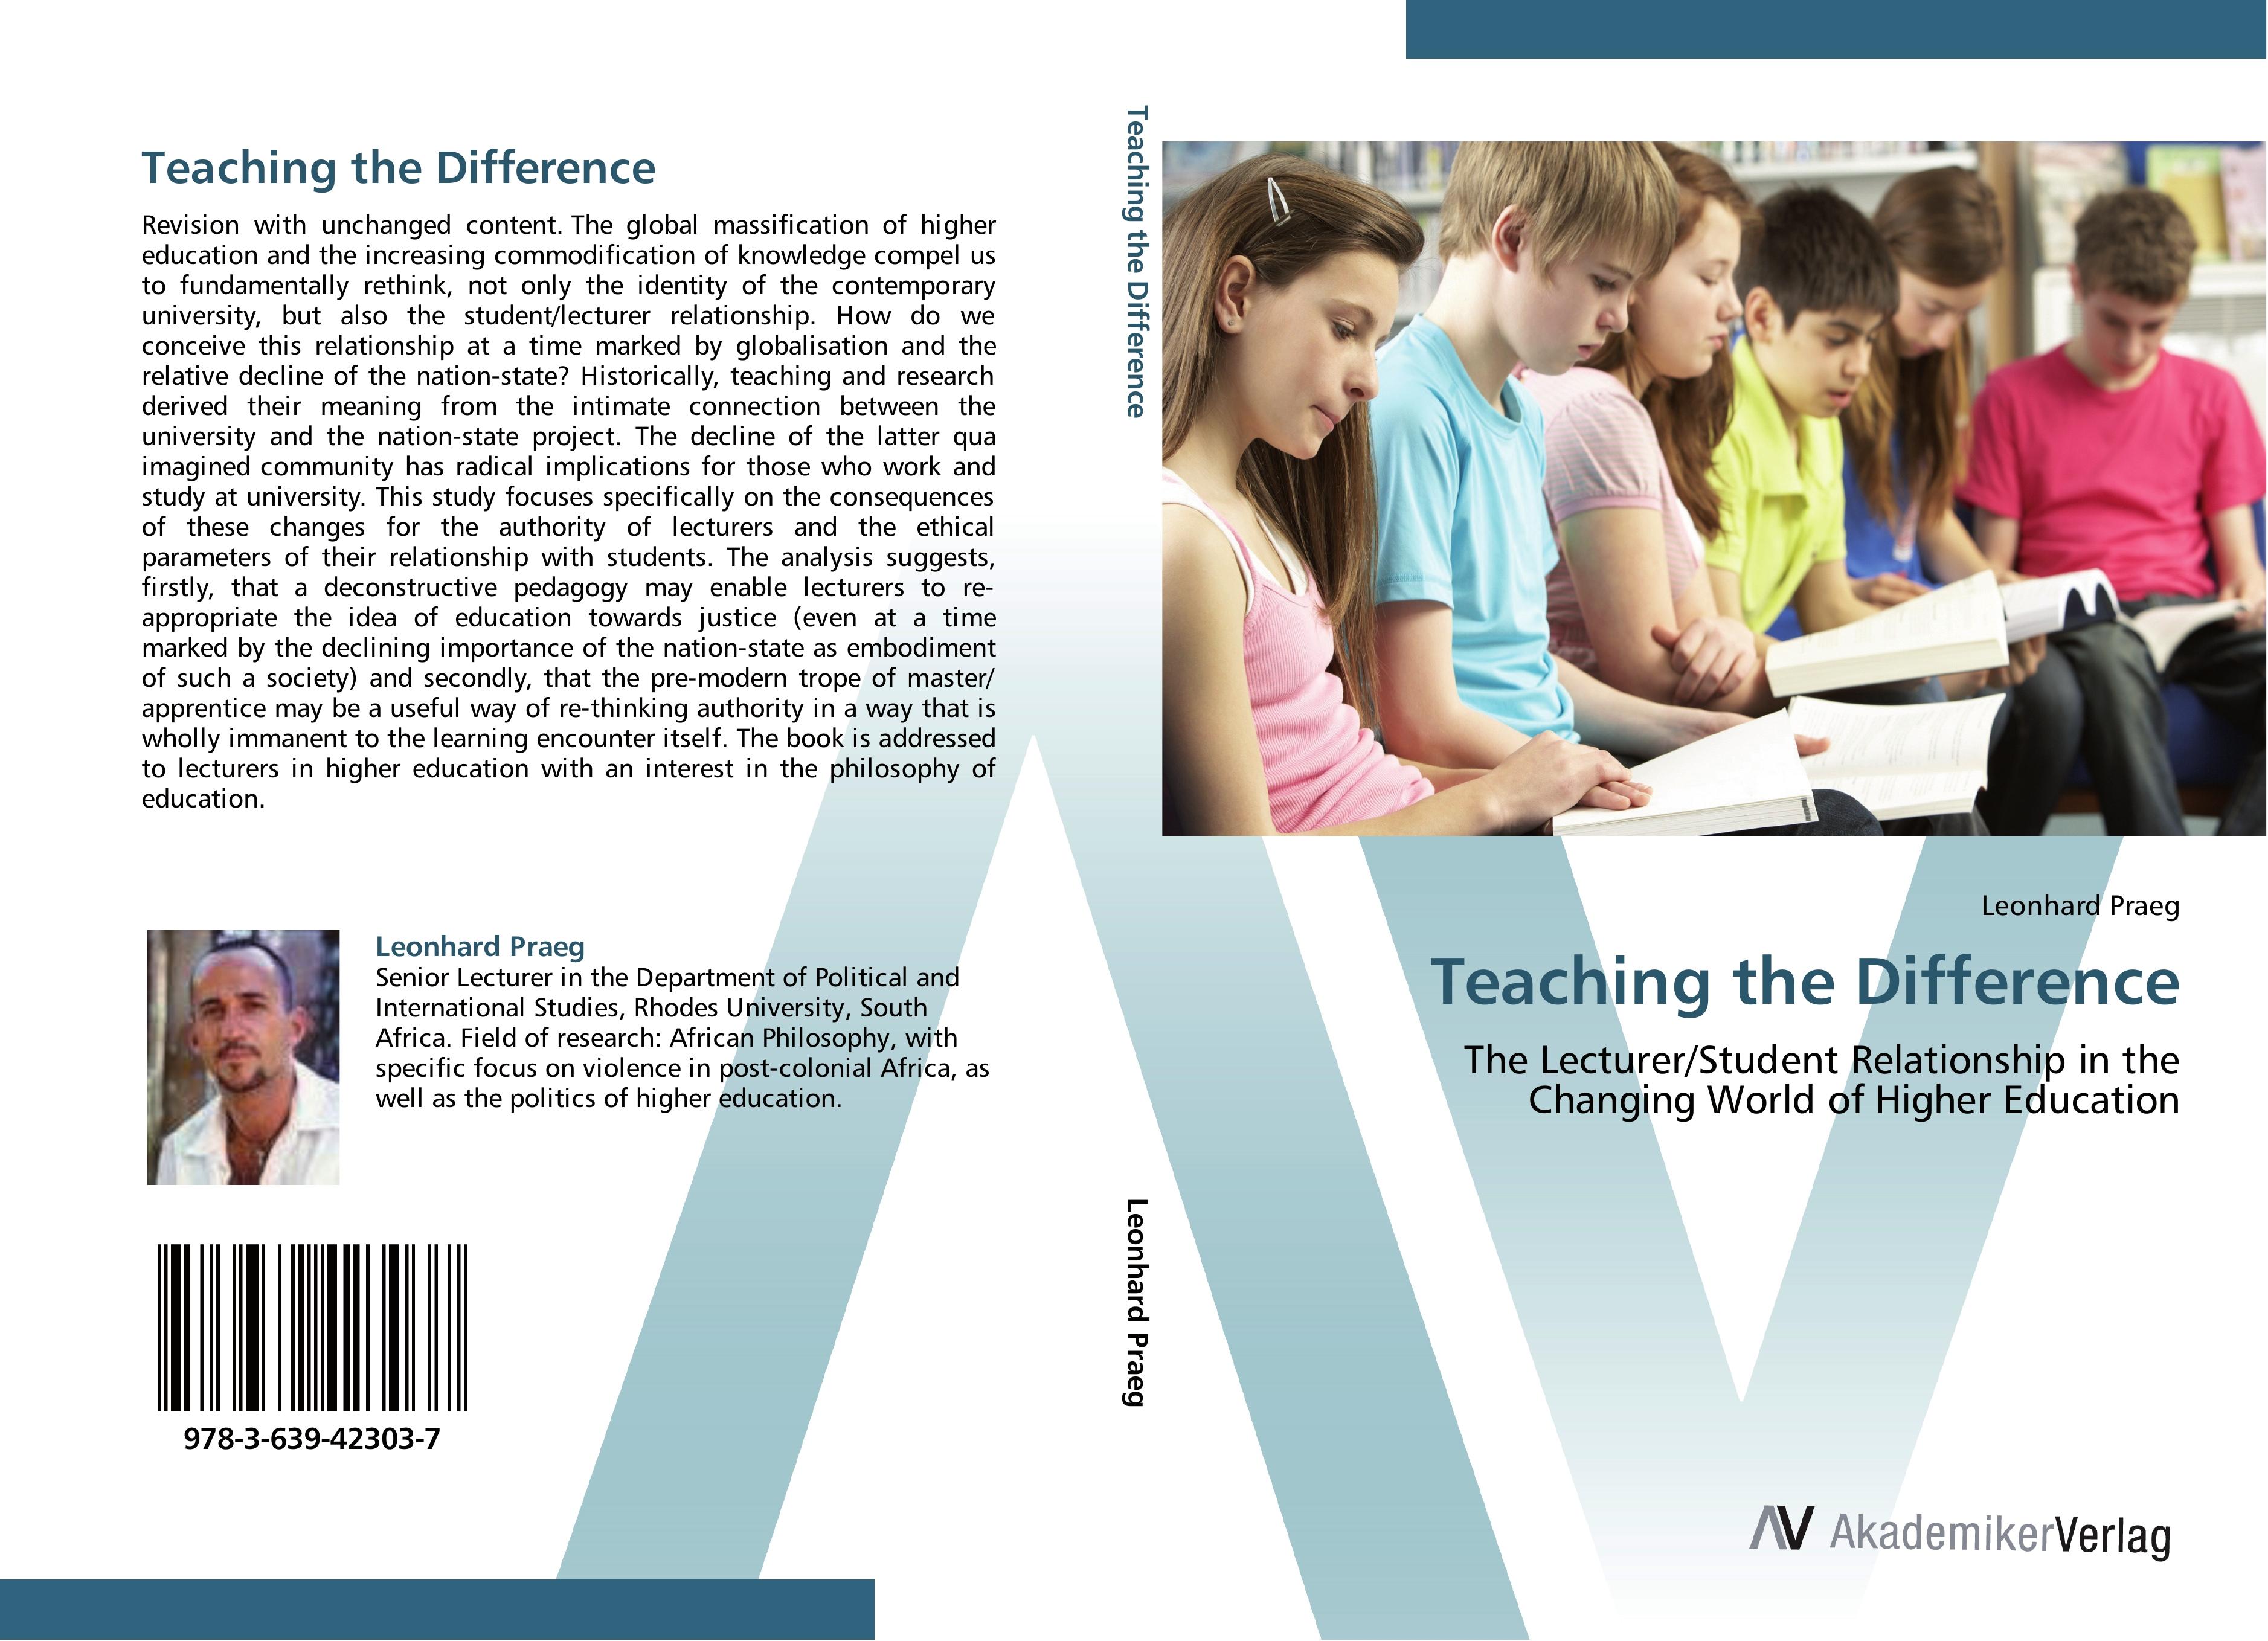 Teaching the Difference - Leonhard Praeg